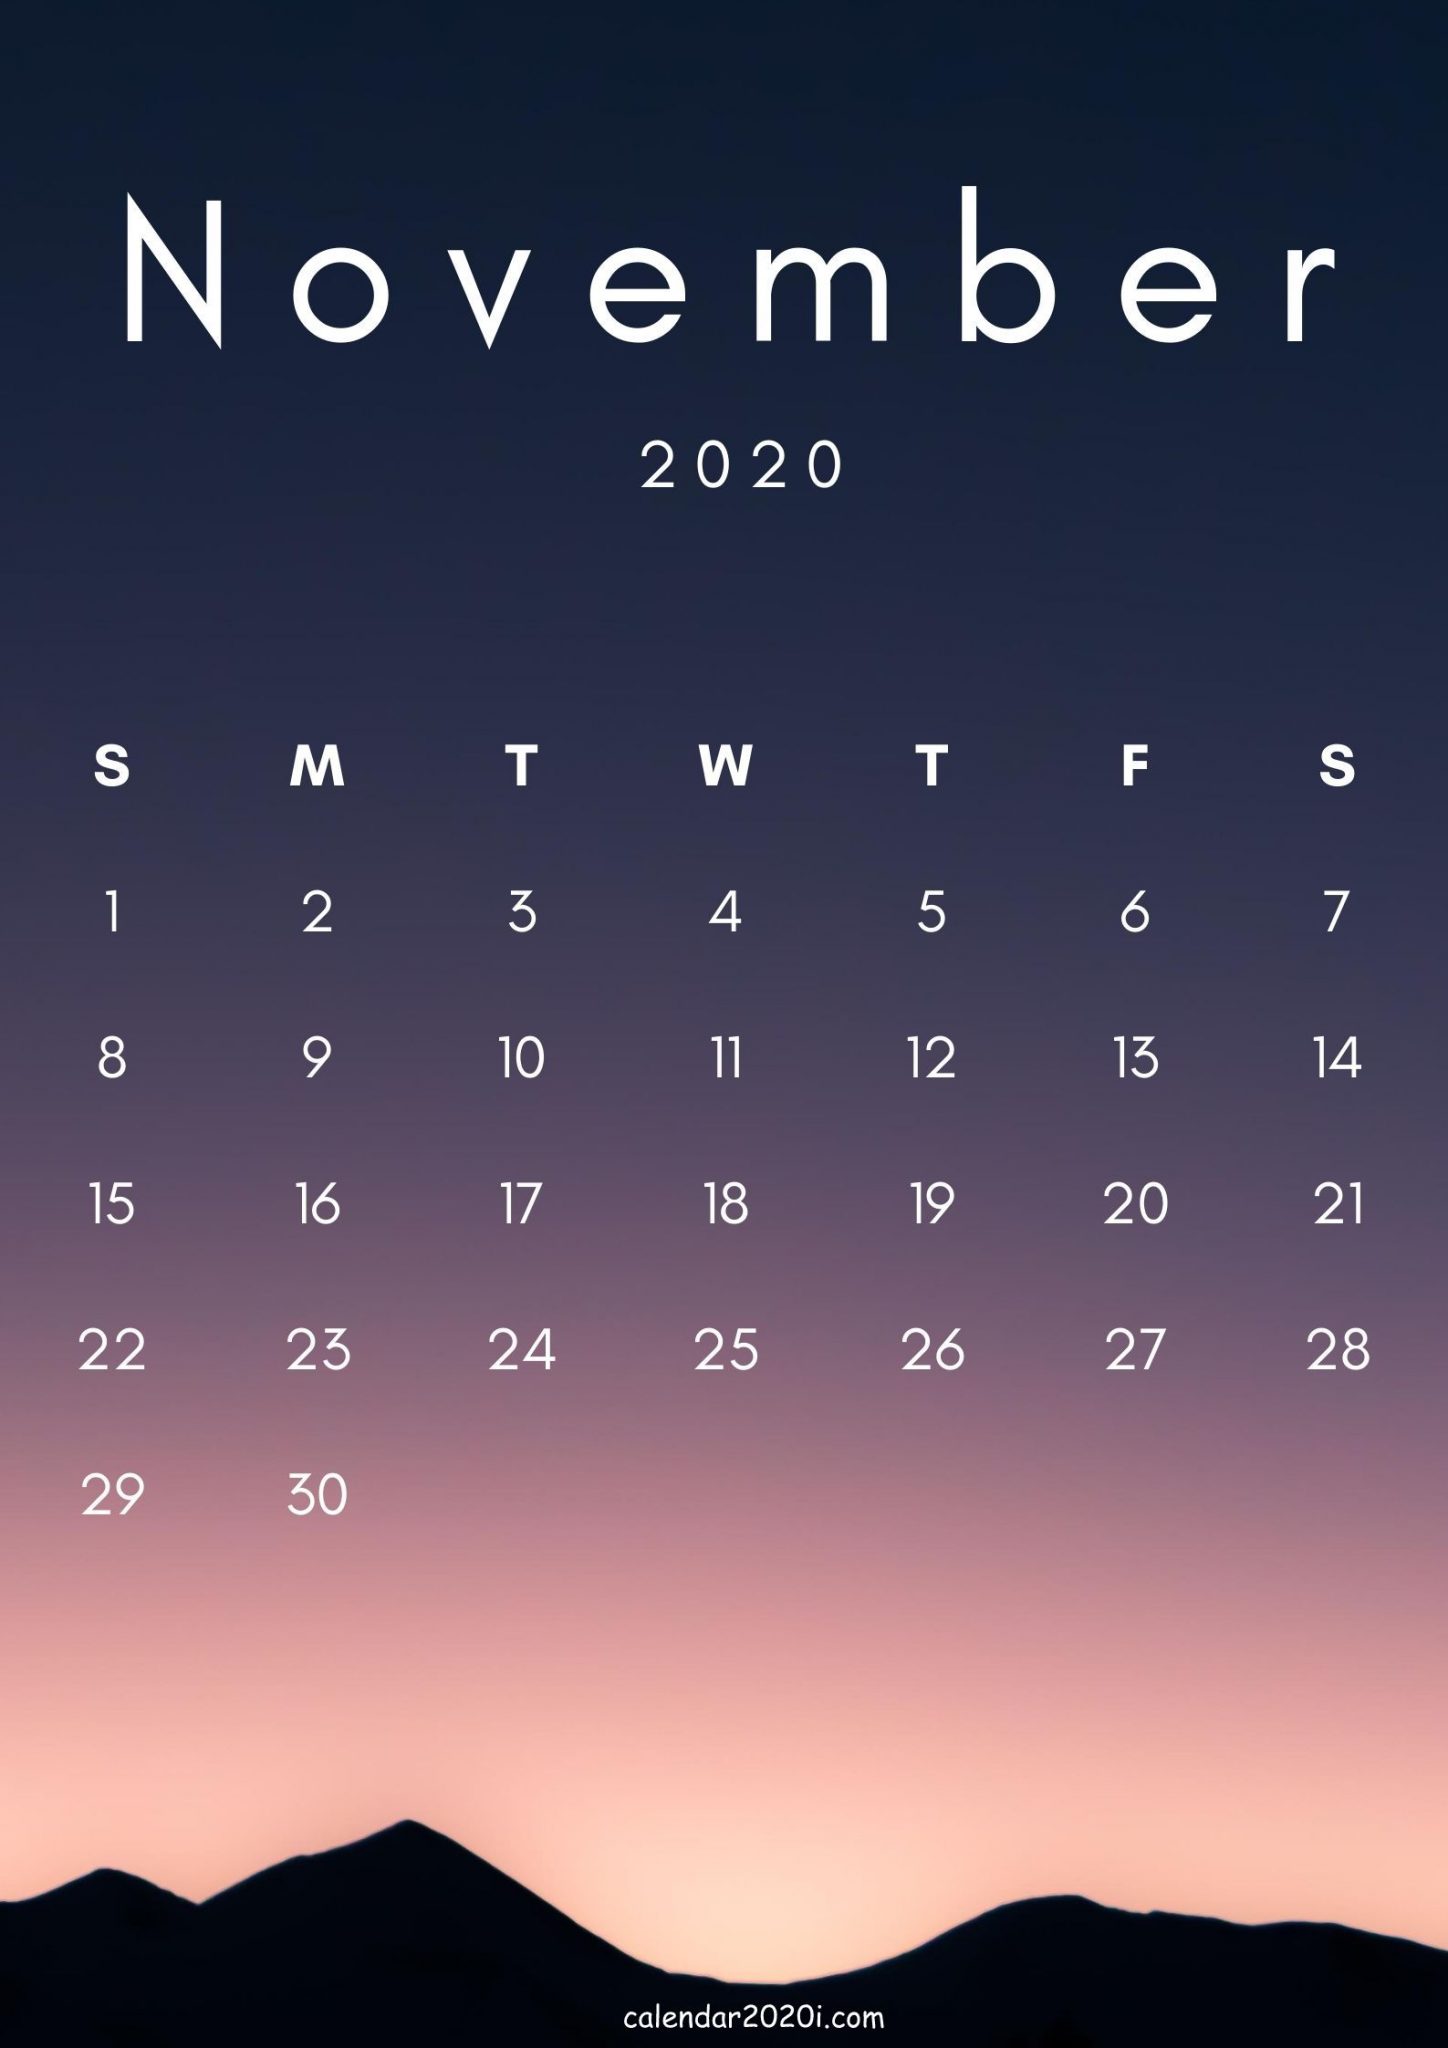 November 2020 iPhone Calendar Wallpaper Download